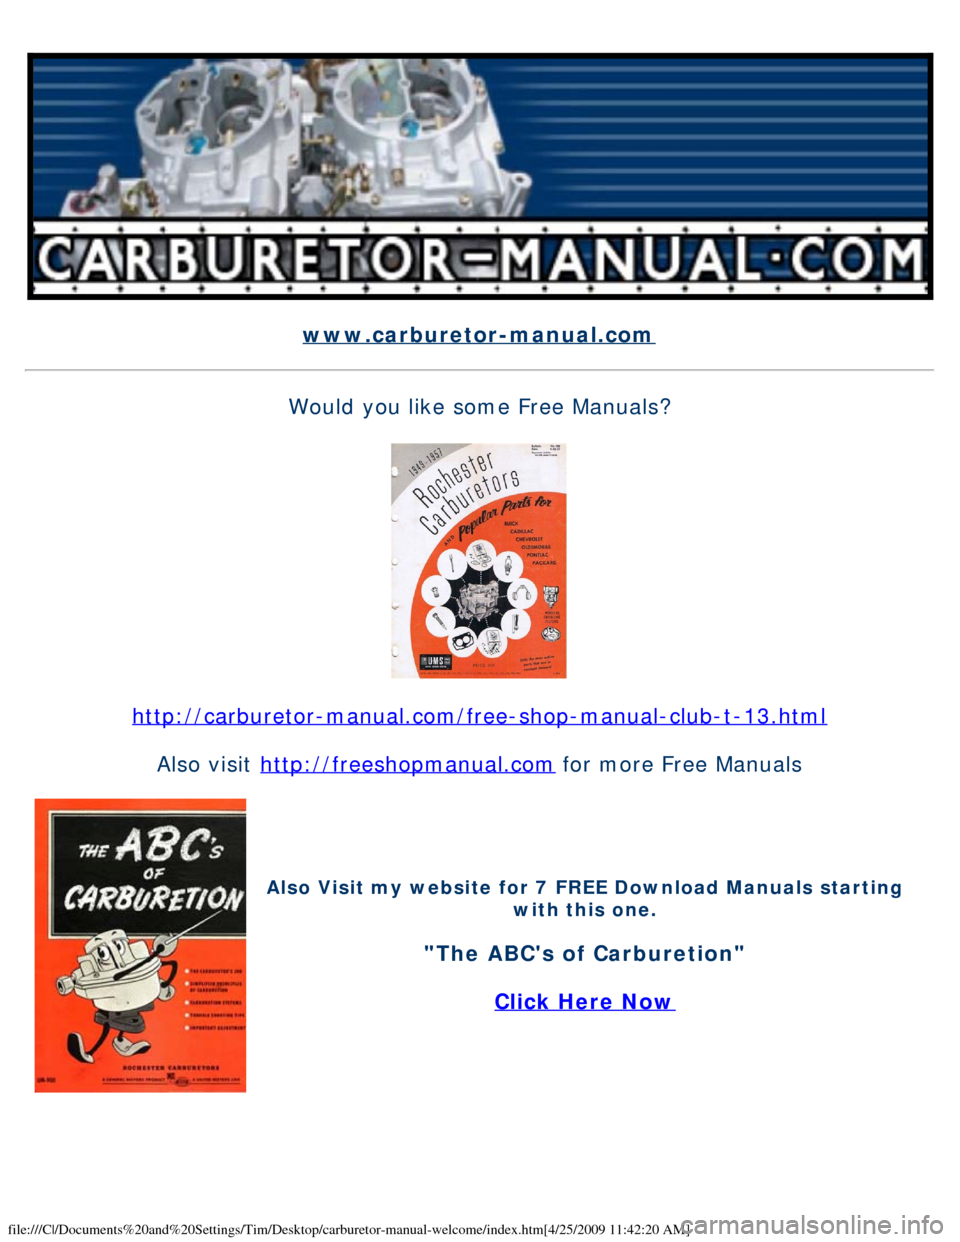 DODGE POLARA 1965 3.G Owners Manual file:///C|/Documents%20and%20Settings/Tim/Desktop/carburetor-manual-welc\
ome/index.htm[4/25/2009 11:42:20 AM]
www.carburetor-manual.com
Would you like some Free Manuals?
http://carburetor-manual.com/